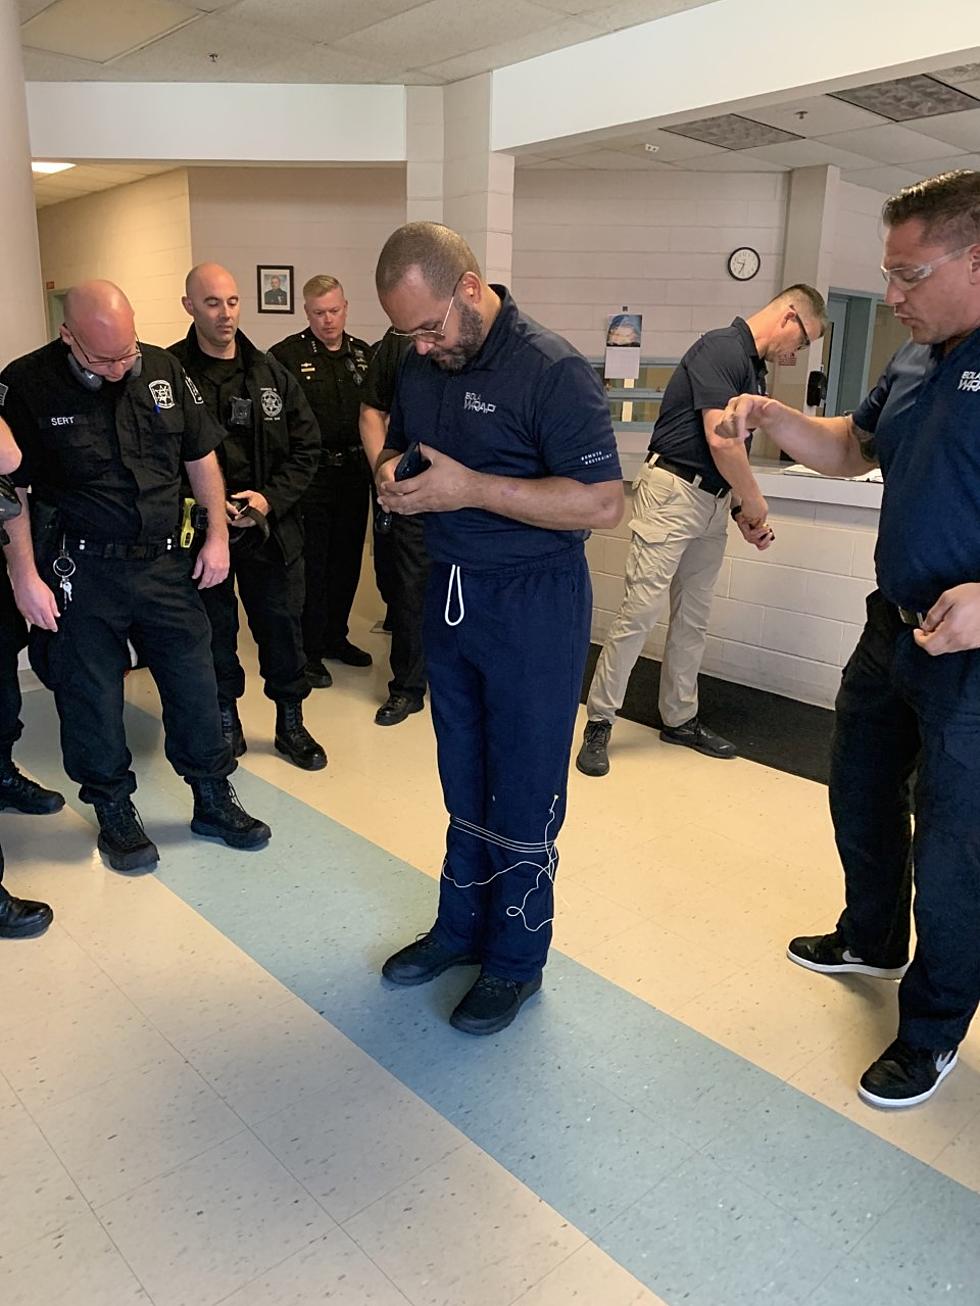 High Tech Handcuffs, Oneida County Sheriff’s Office Gets New Restraint Tool